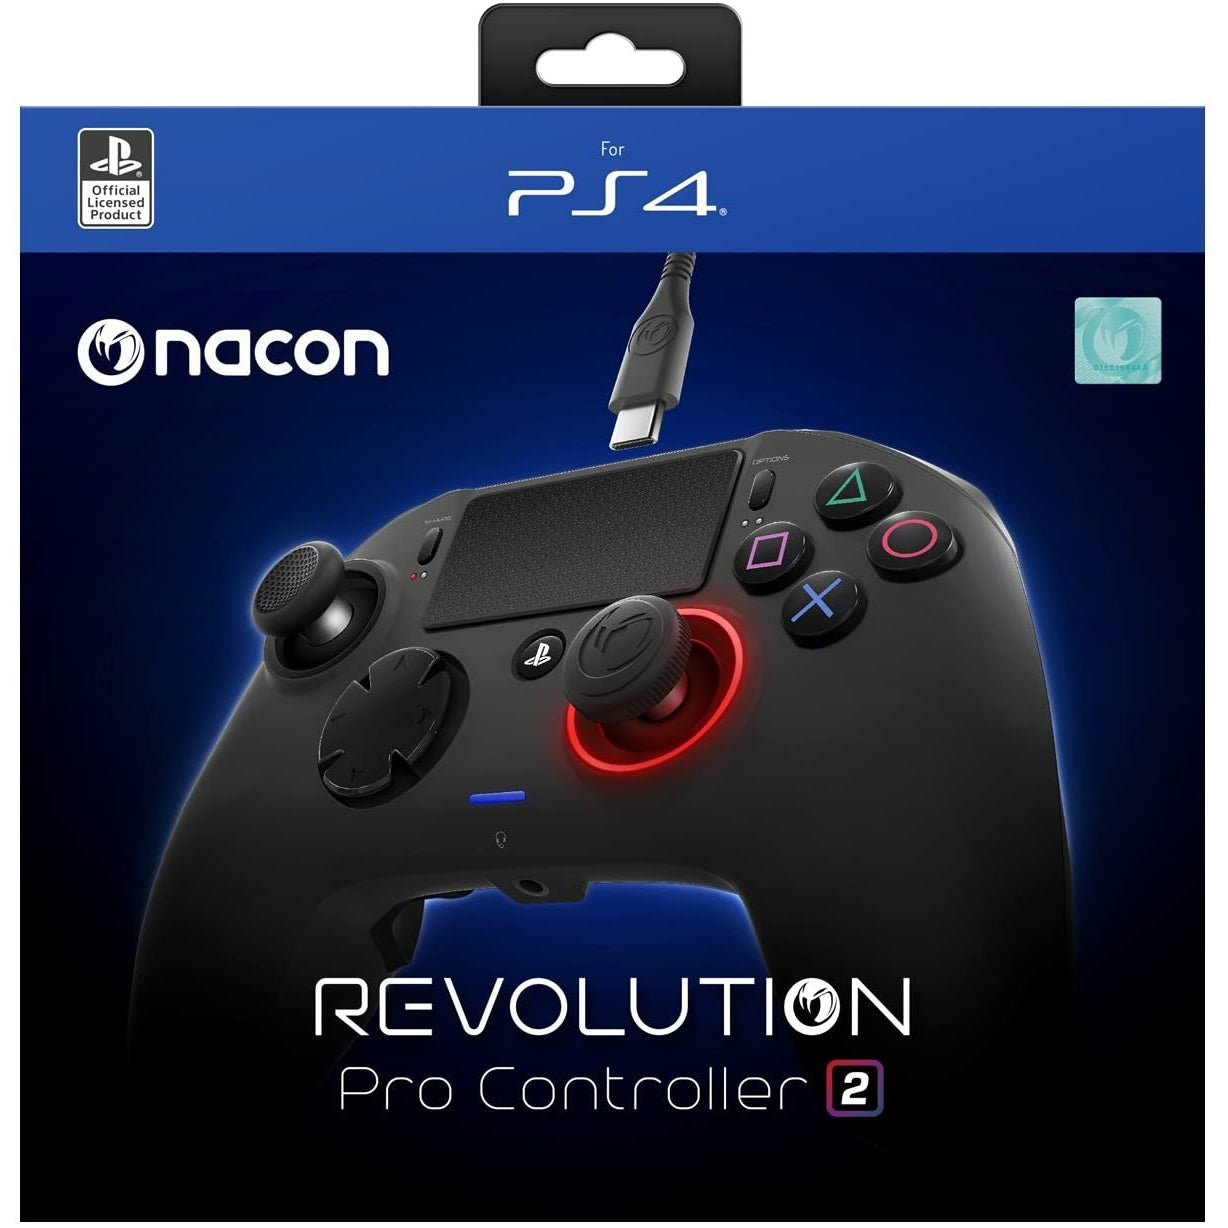 Nacon Revolution Pro Controller 2 for PS4 - Black